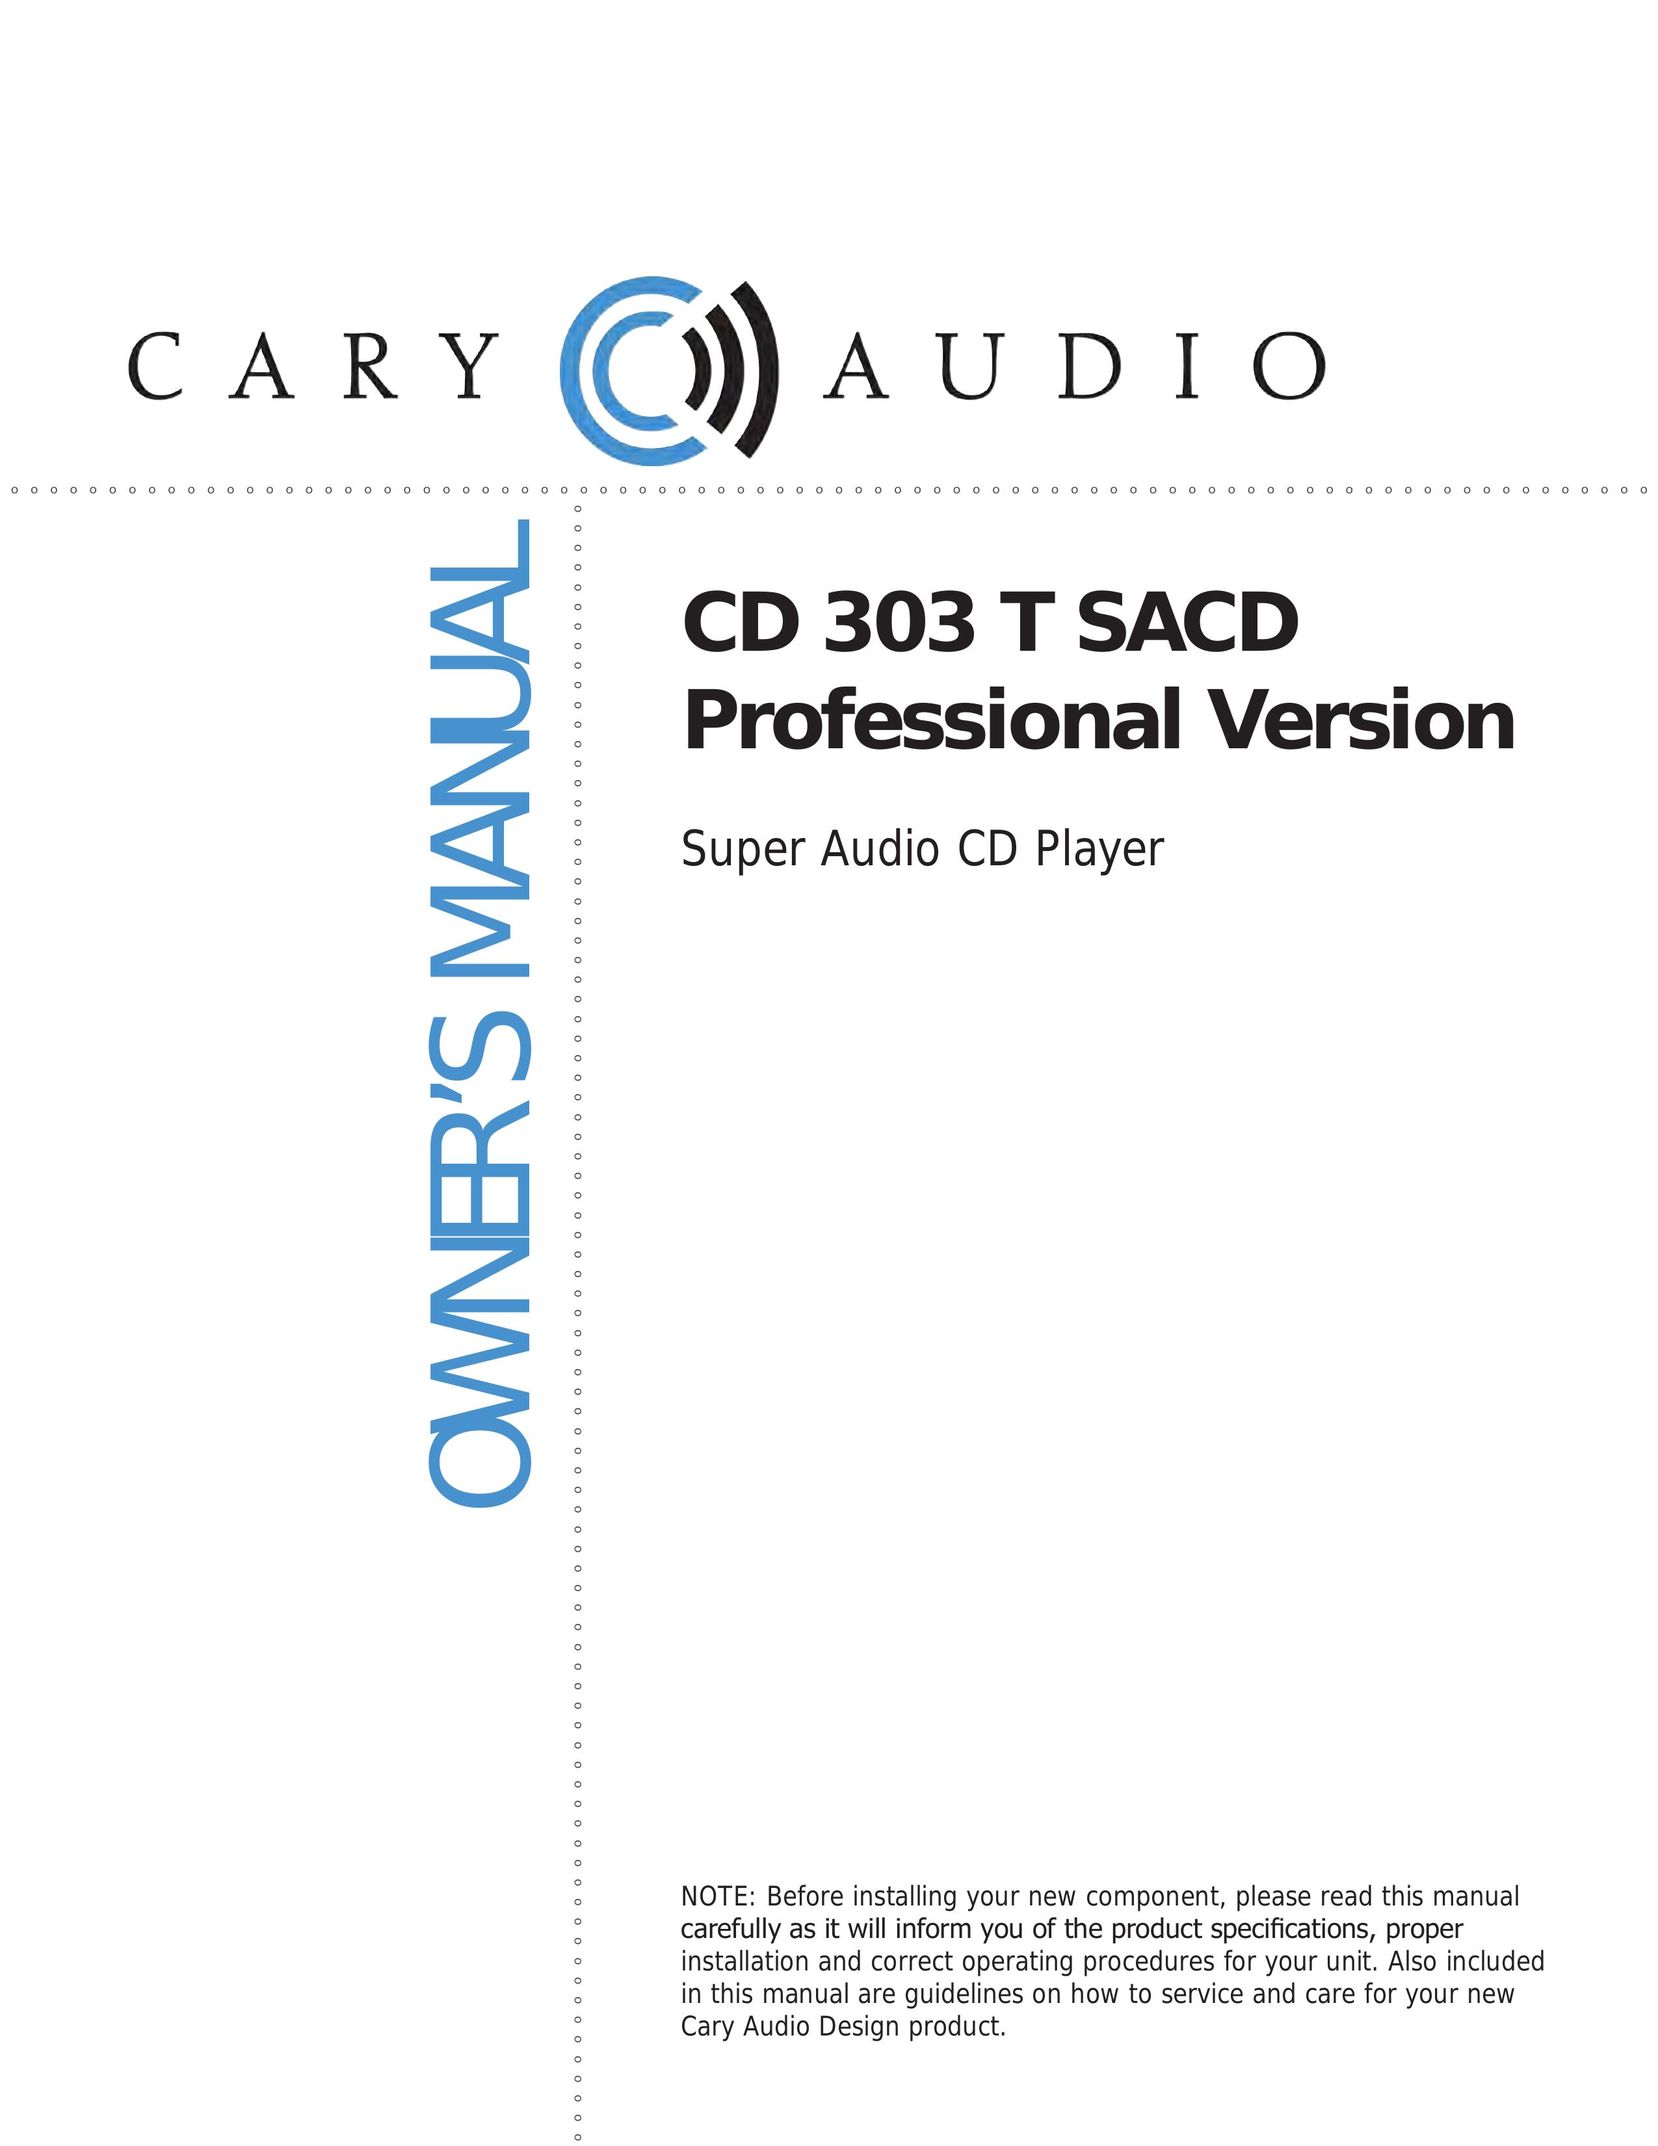 Cary Audio Design CD 303 T SACD CD Player User Manual